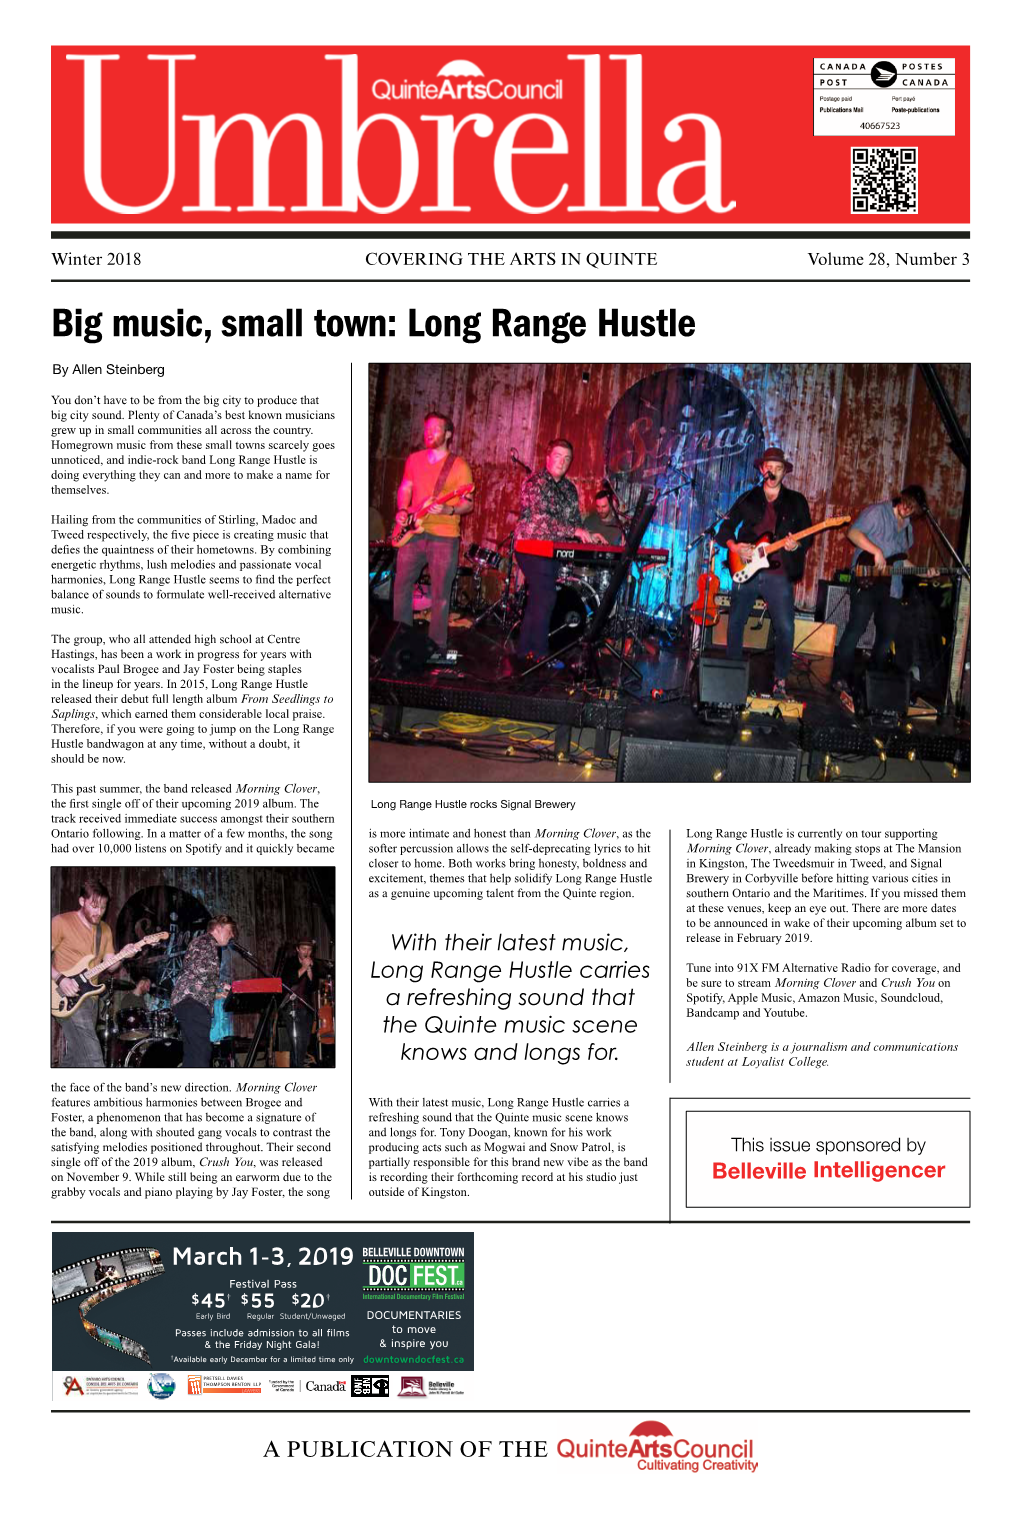 Big Music, Small Town: Long Range Hustle